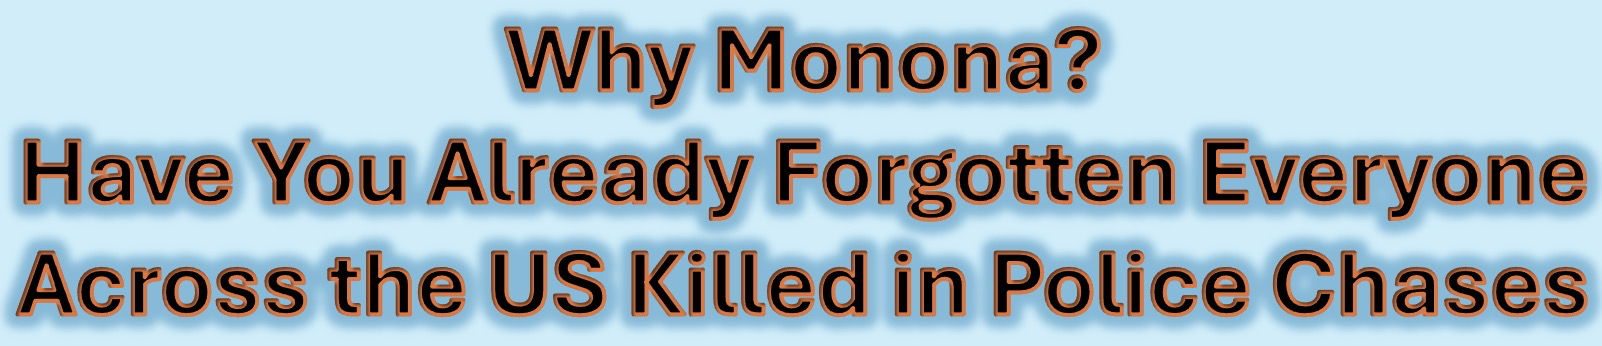 BAD OUTCOMES 2: Monona continues down a dangerous path